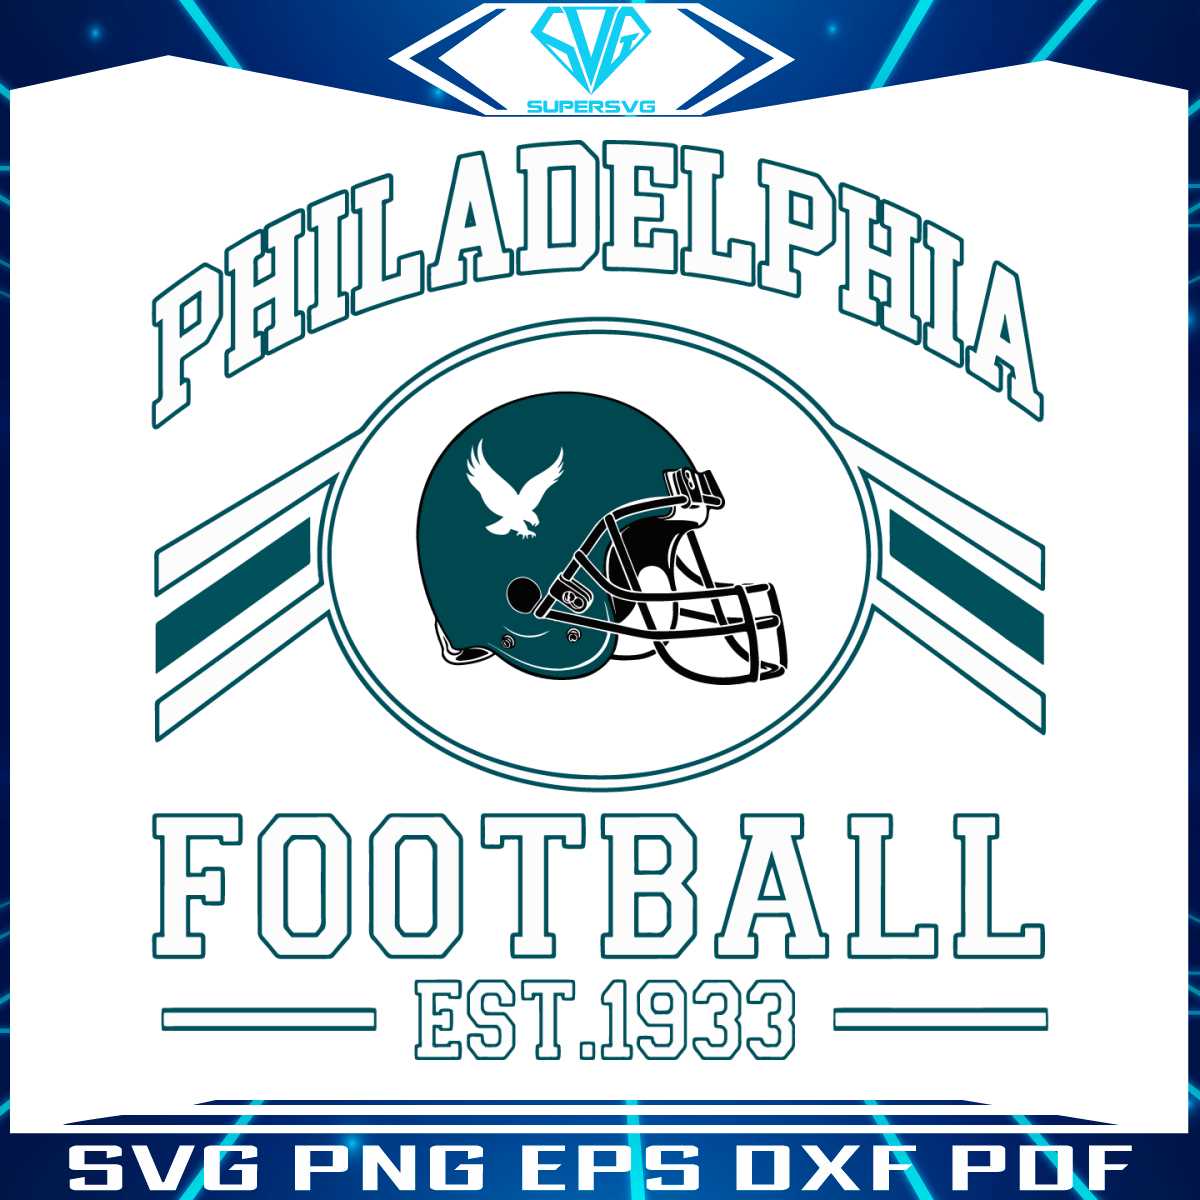 philadelphia-football-est-1933-logo-svg-cutting-digital-file